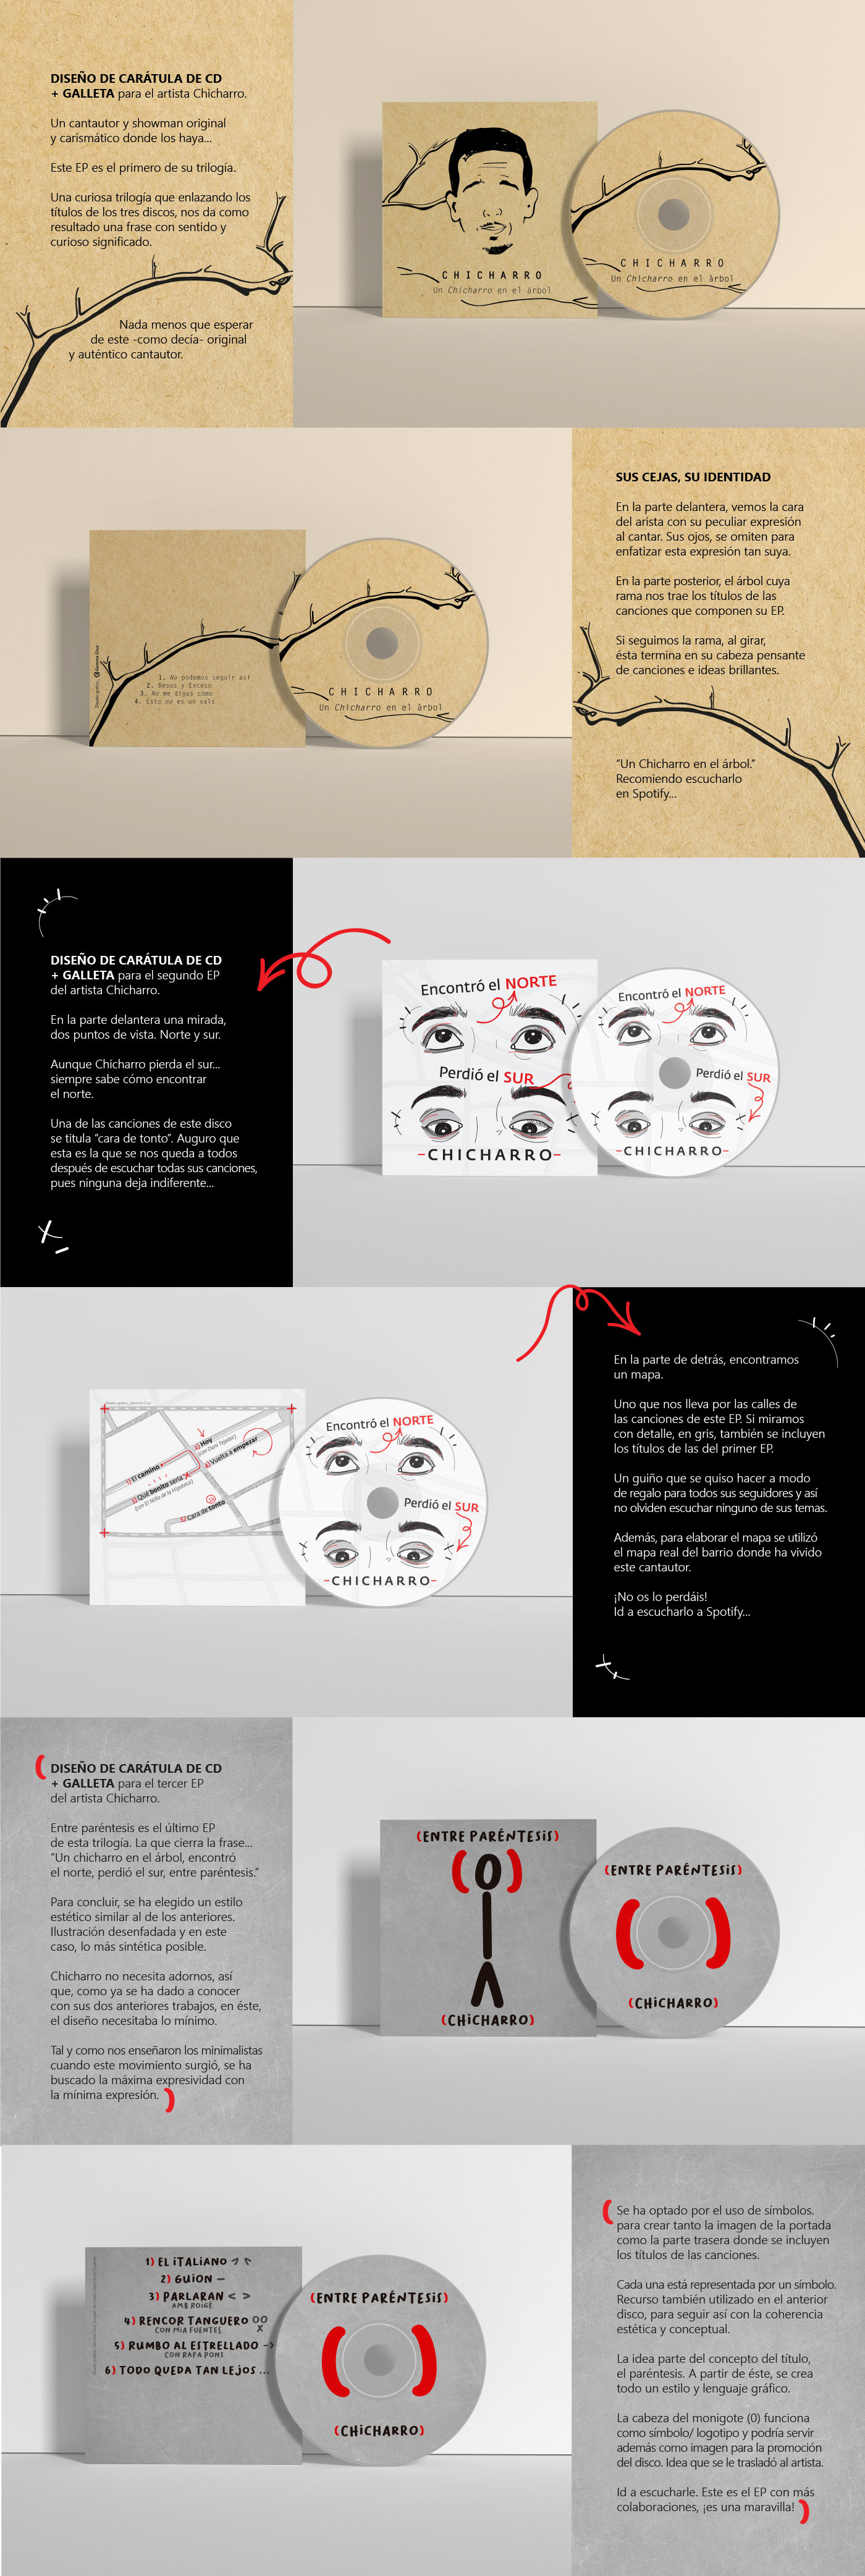 Cantautor chicharro discos diseño gráfico ep ilustracion musica trilogia